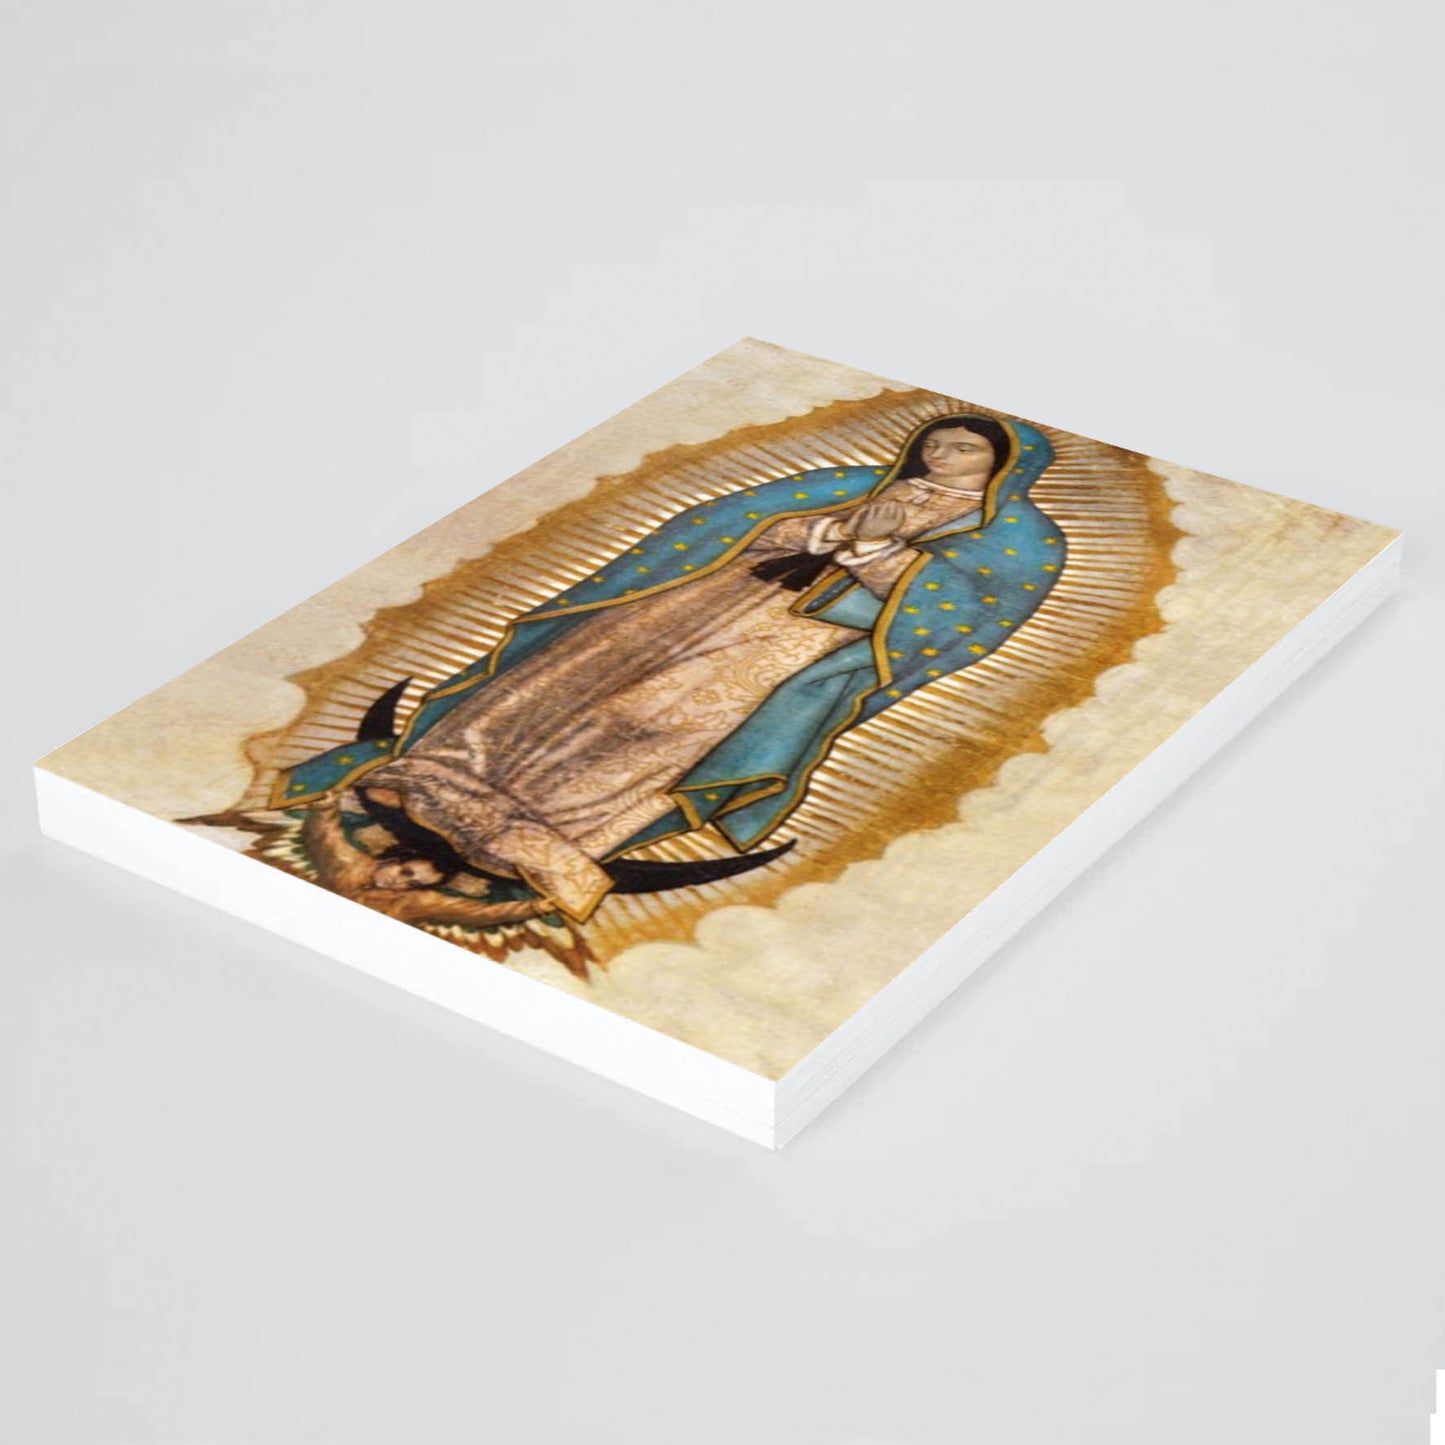 Imagen religiosa Virgen de Guadalupe 376